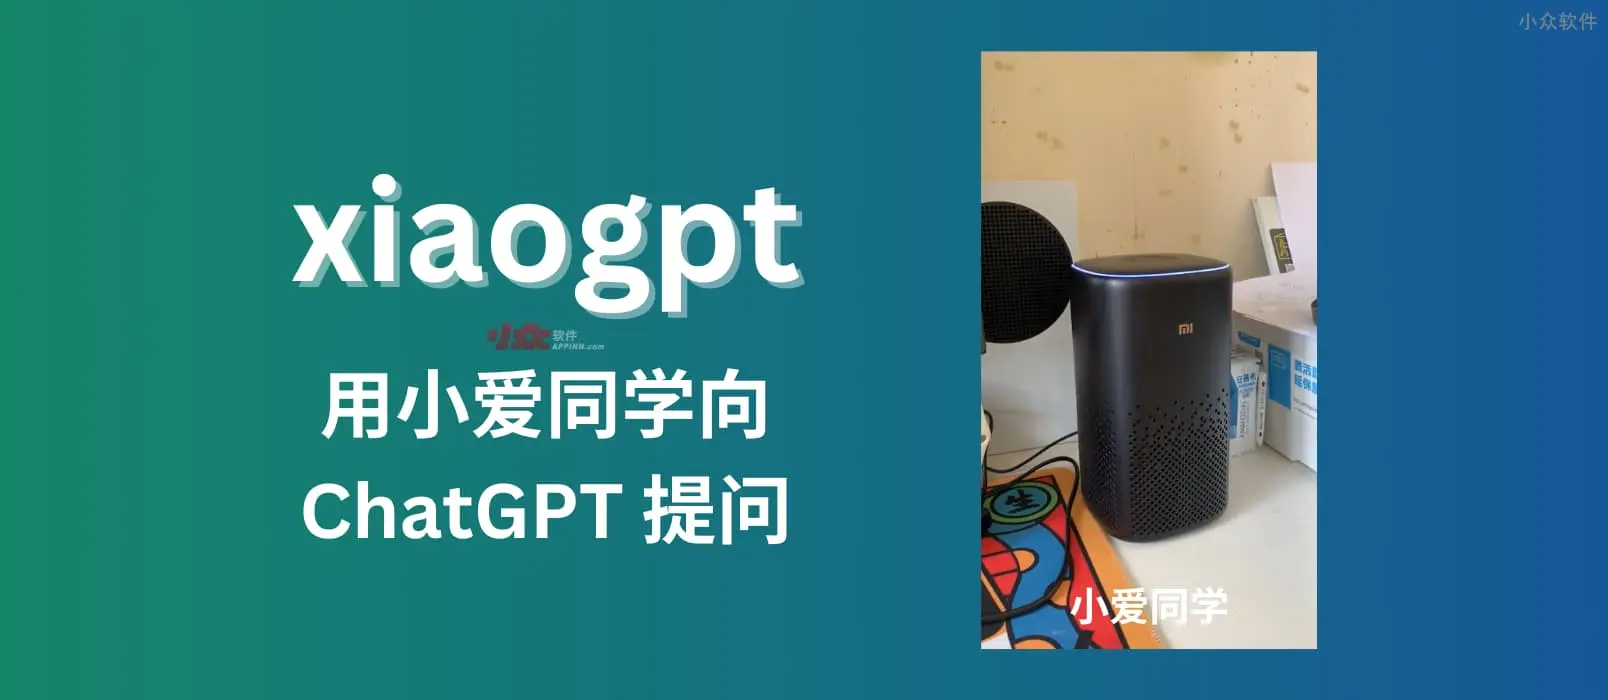 chatgpt中文提问没反应 xiaogpt – 用小爱同学向 ChatGPT 提问